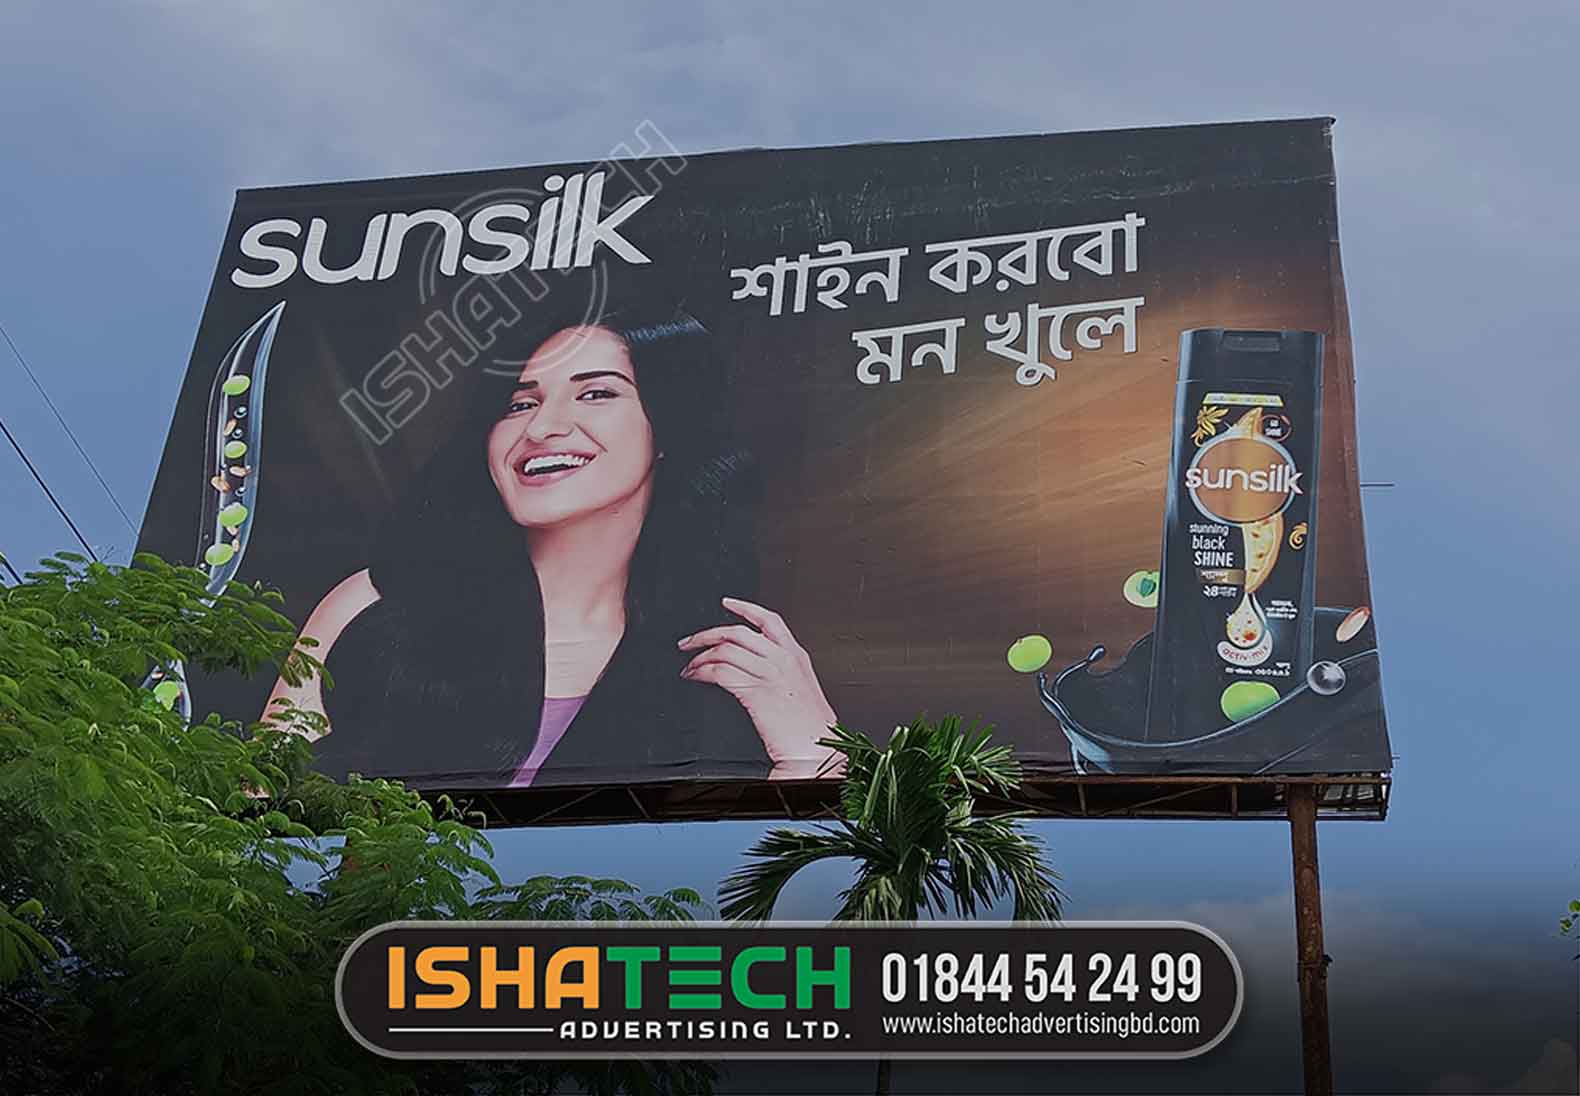 Best hoarding and Billboard ad/advertising Agency in Bangladesh